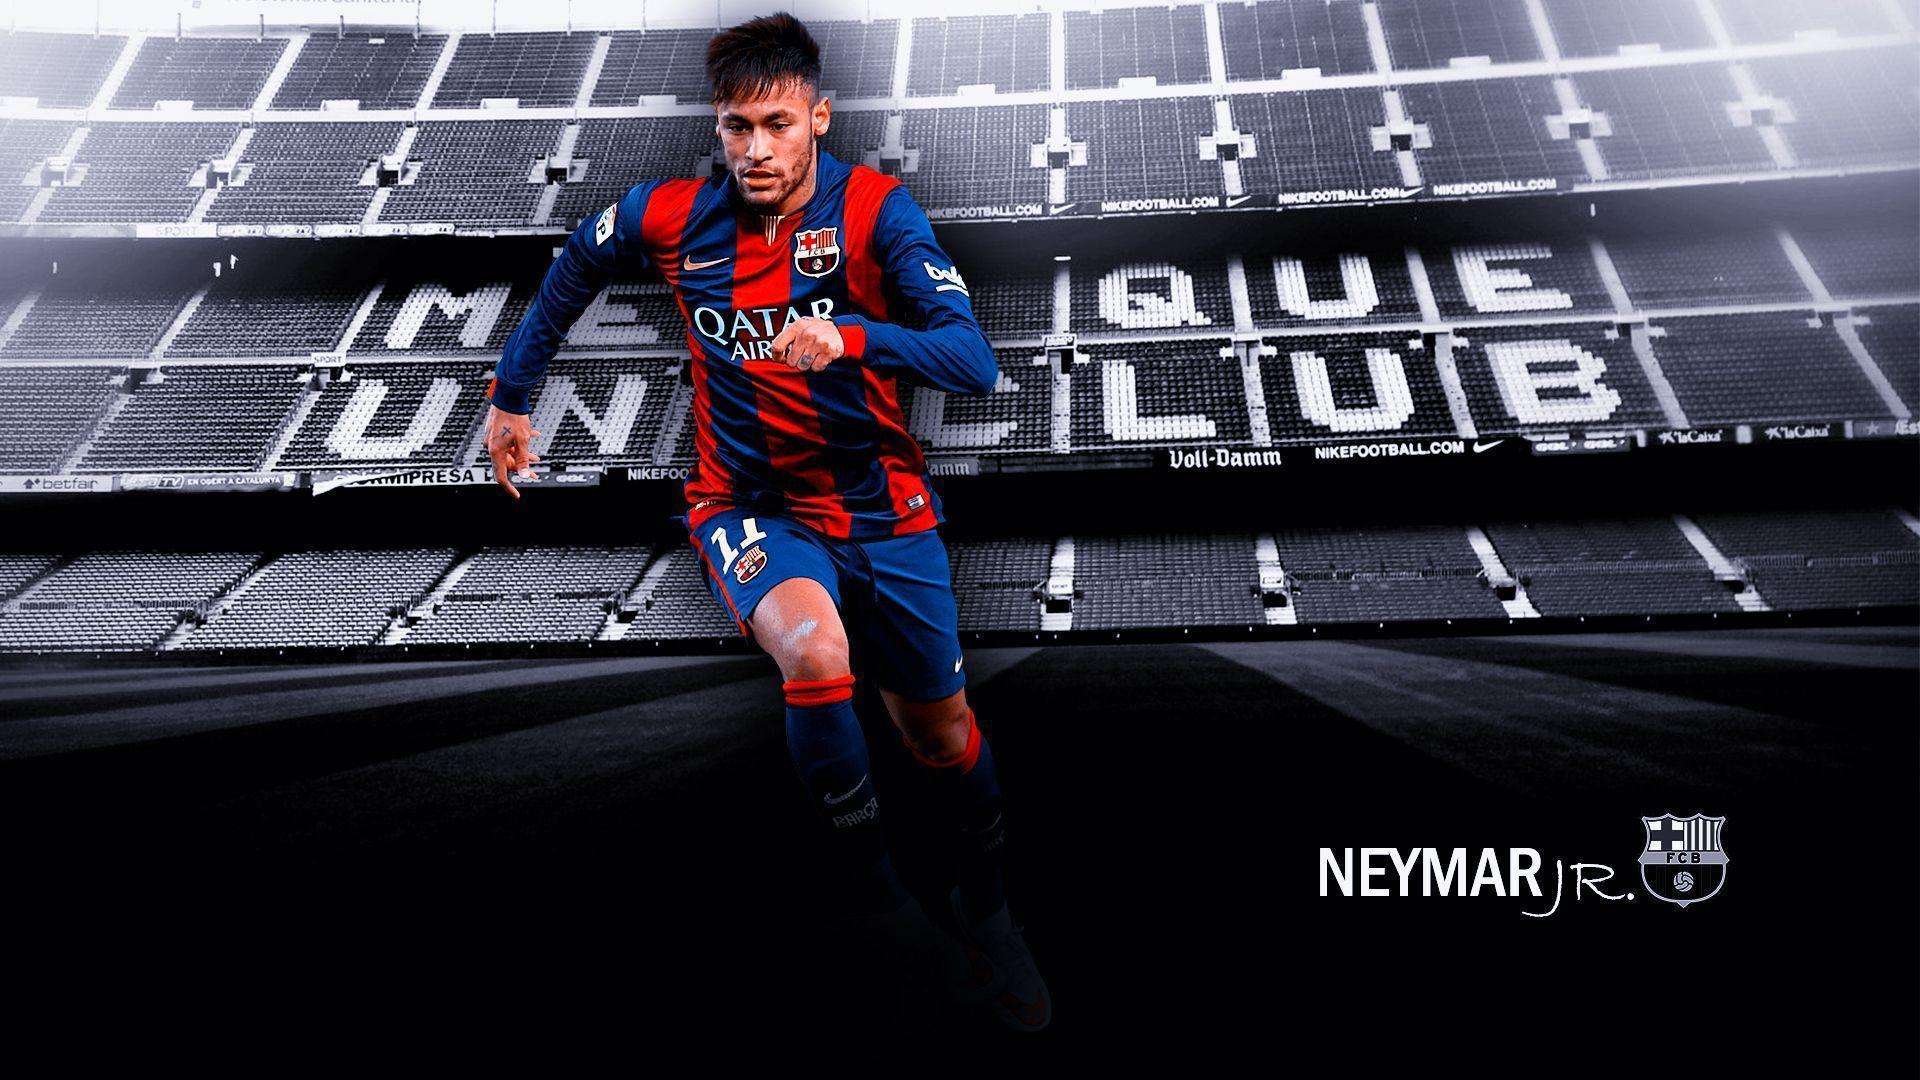 Neymar 2016 Wallpaper HD Wallpaper Background of Your Choice